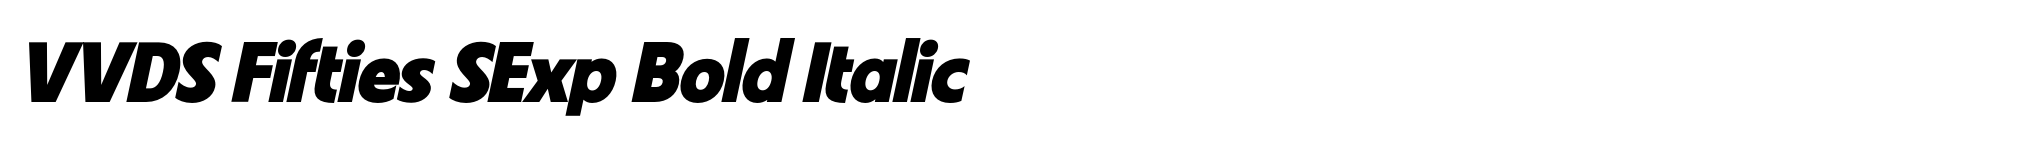 VVDS Fifties SExp Bold Italic image